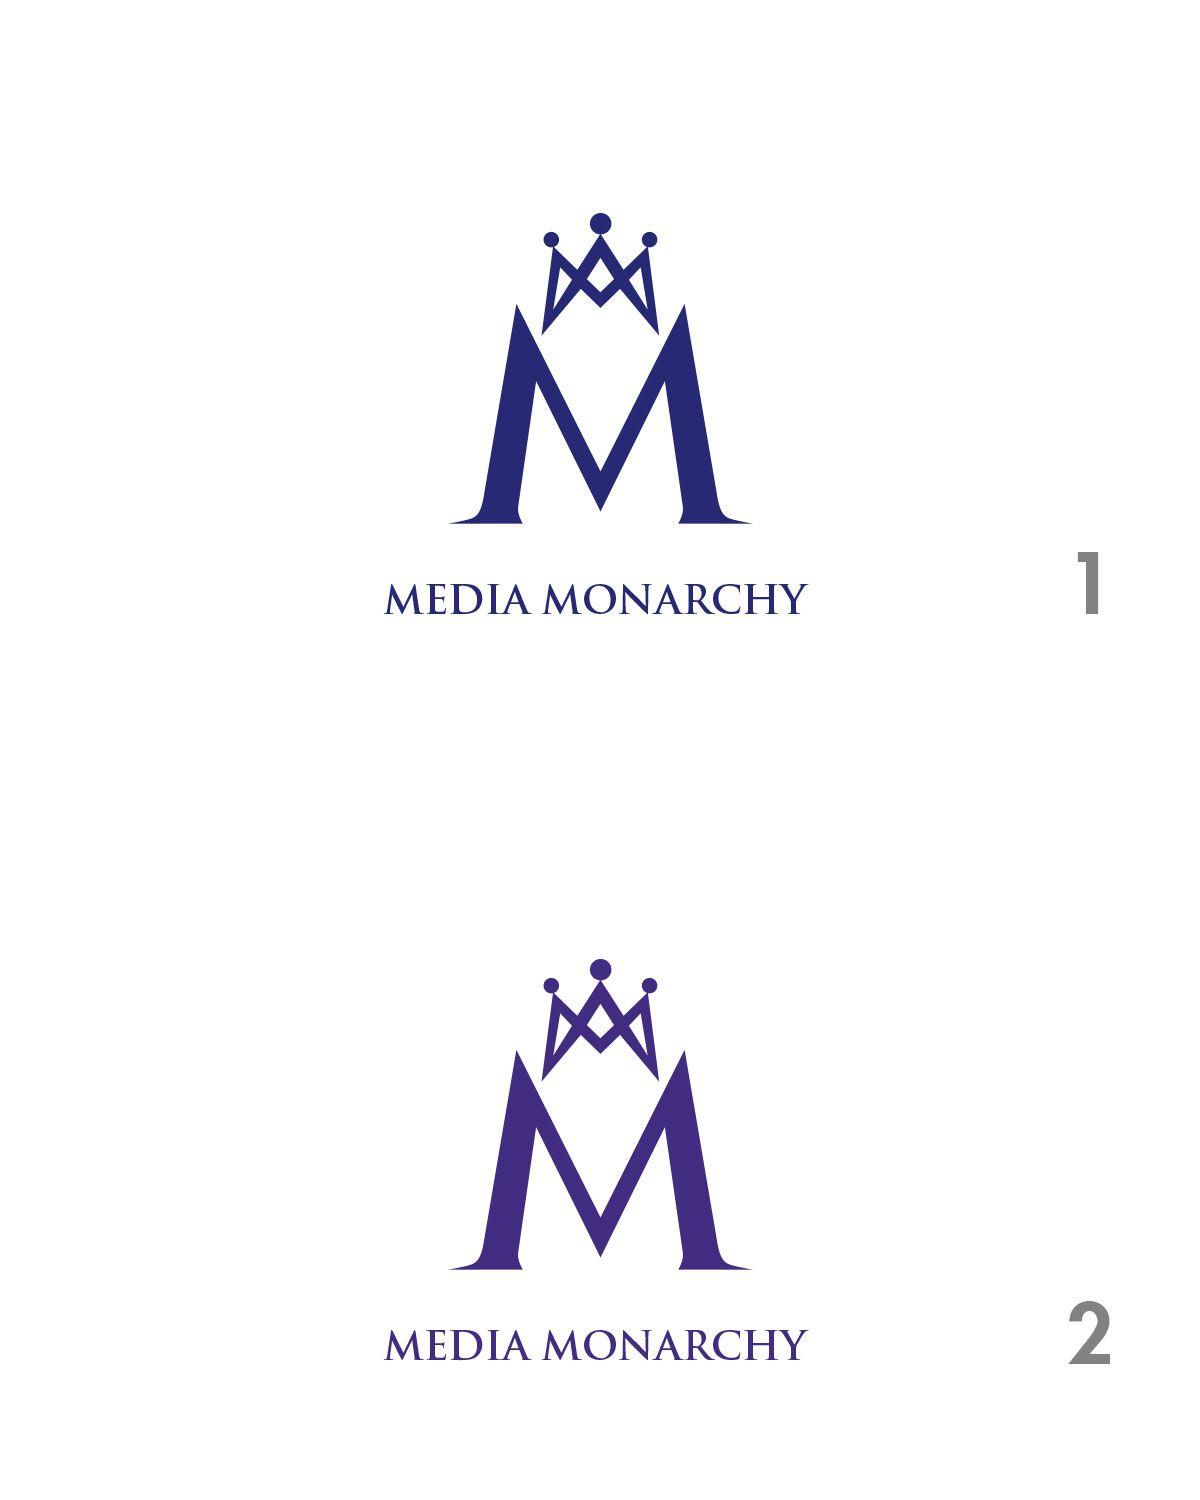 Monarchy Logo - Media Monarchy Logo Creation for Social Media Management Company